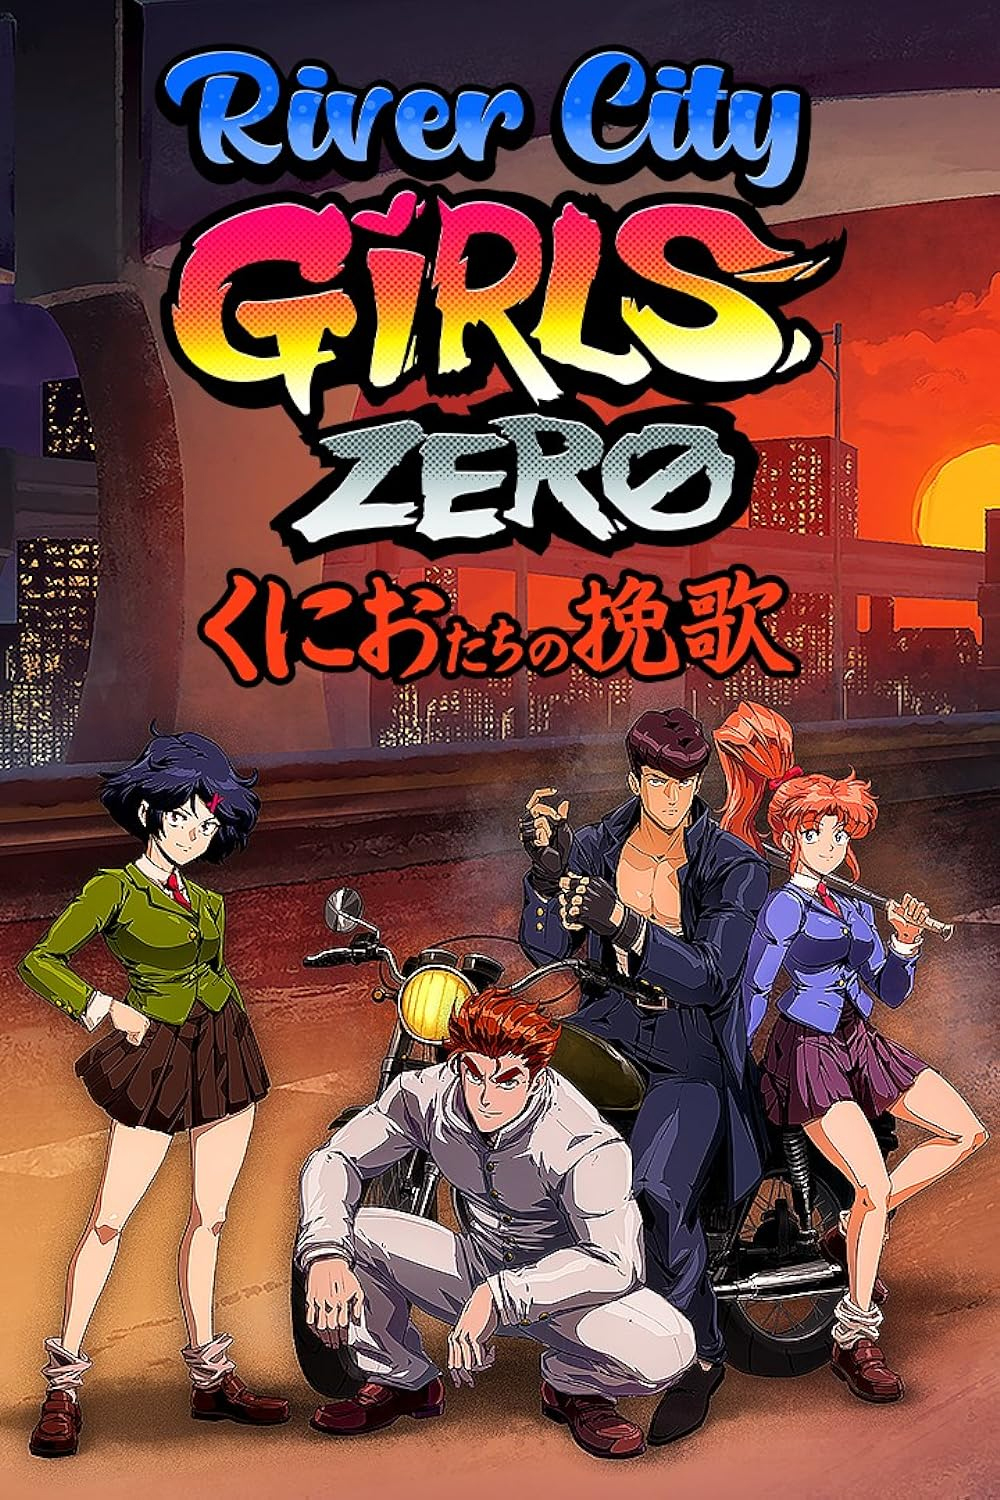 River City Girls Zero [PC, Цифровая версия] (Цифровая версия)